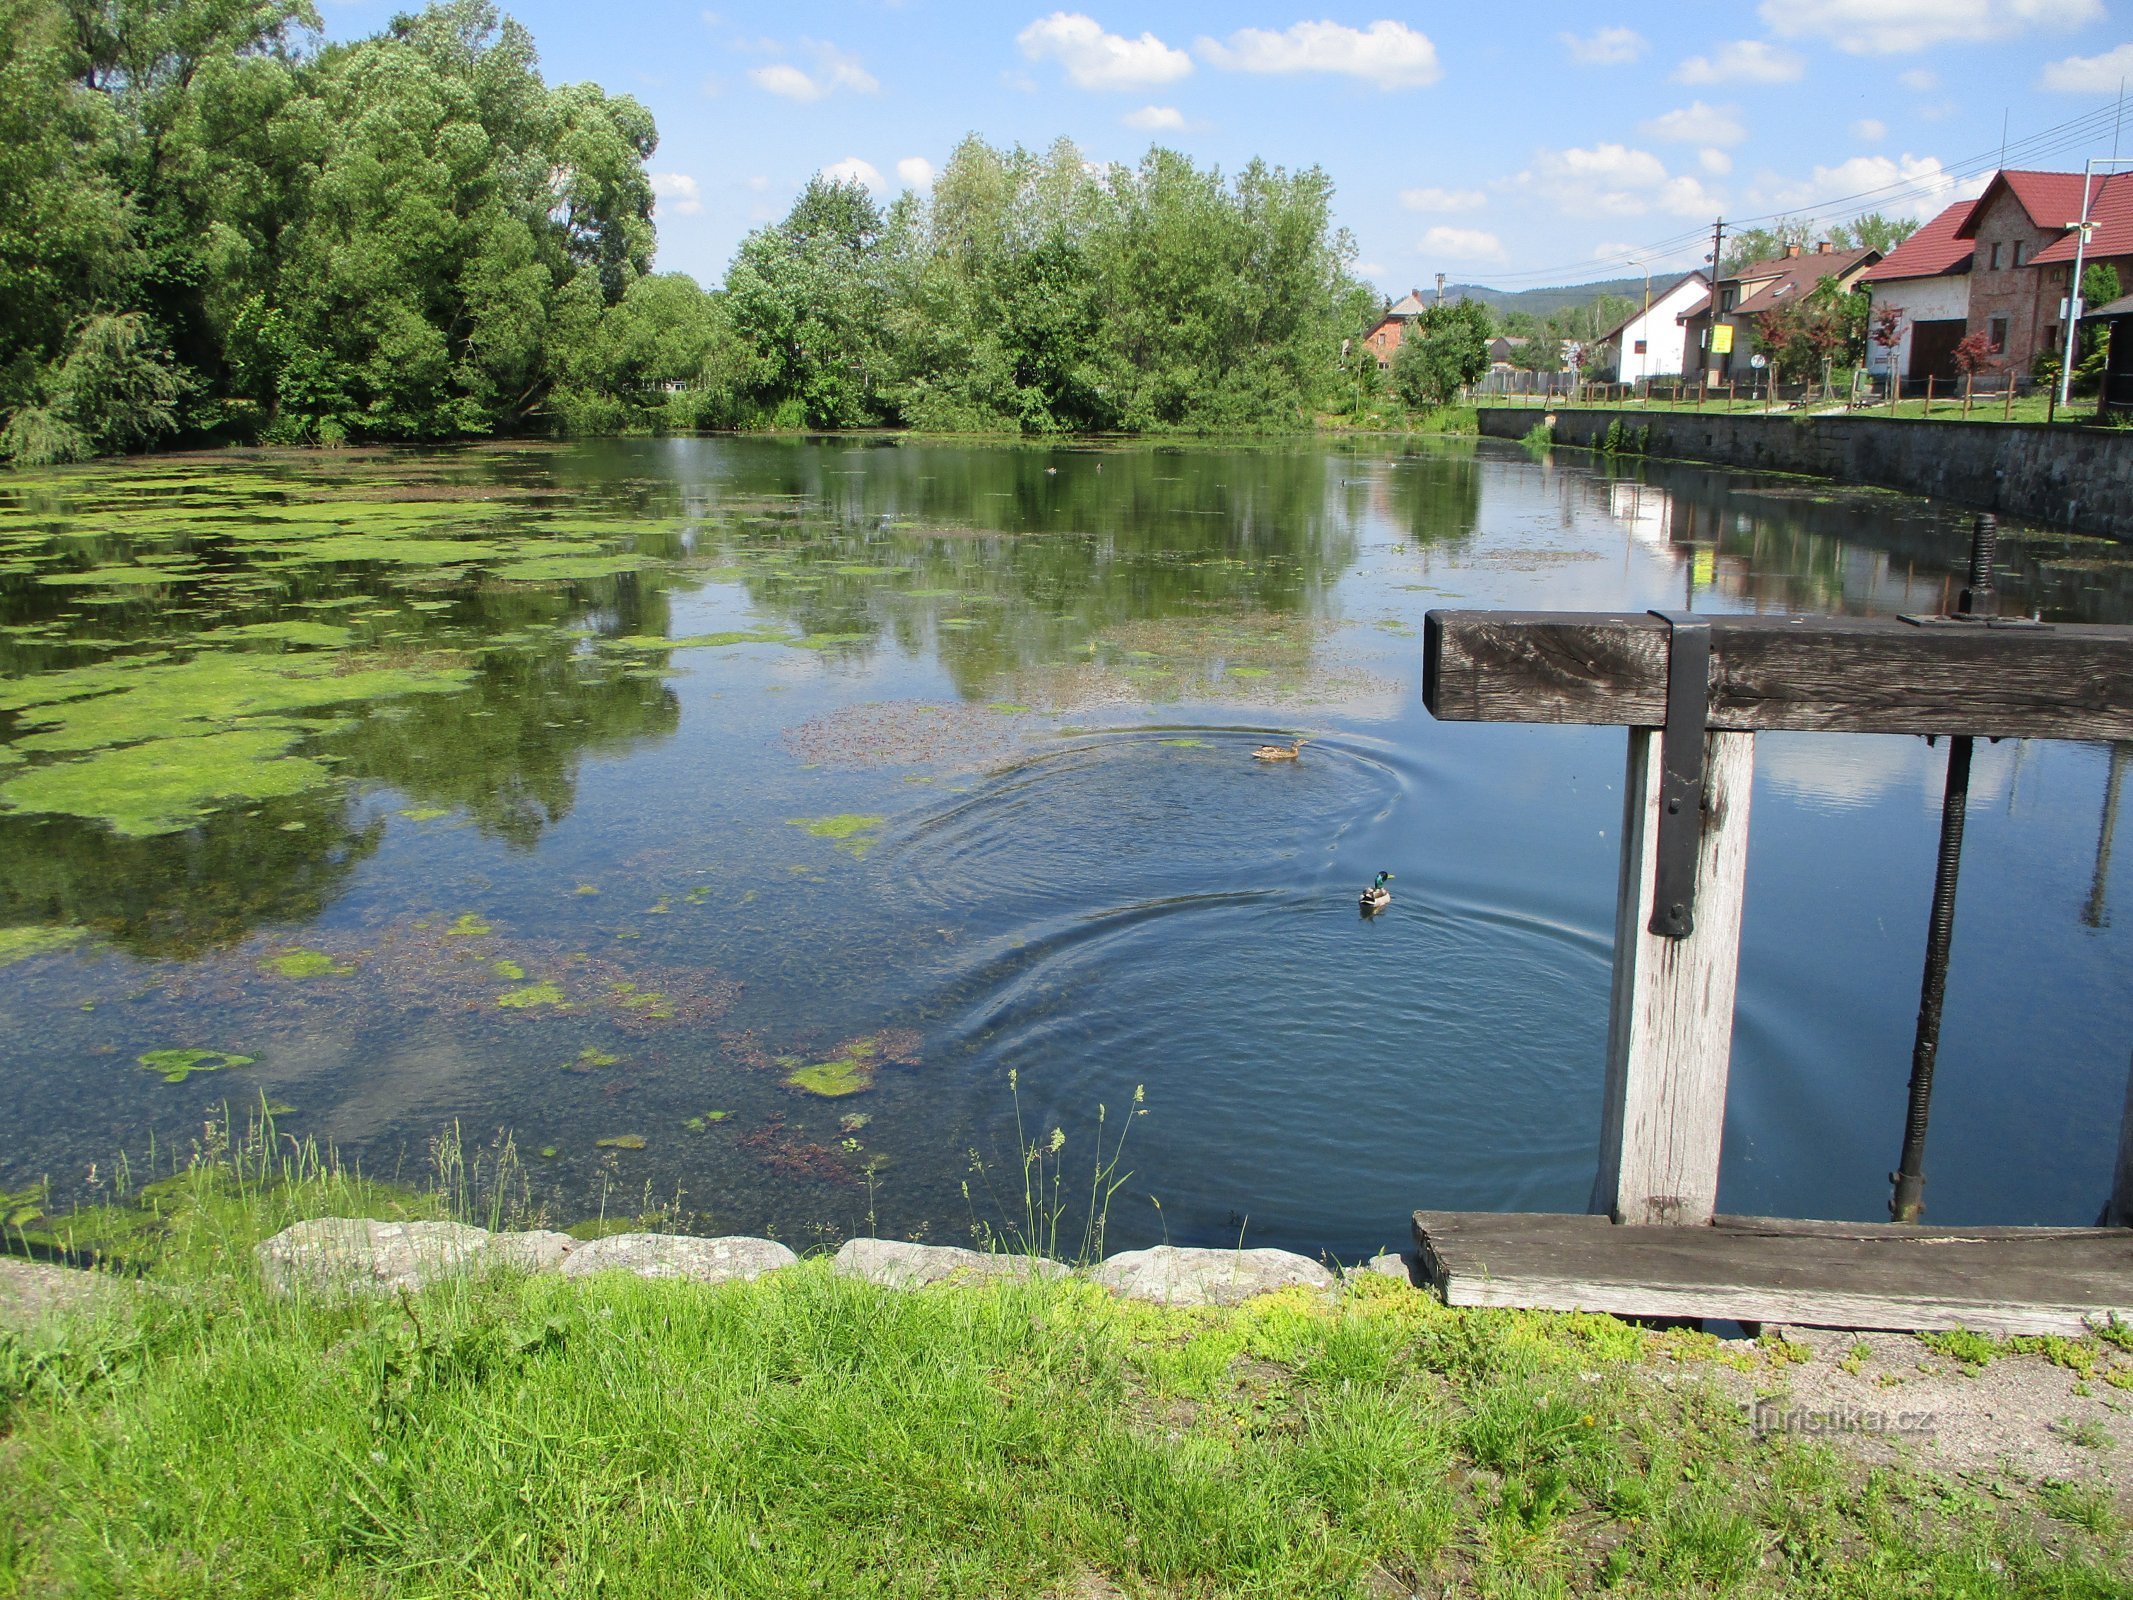 Aman-tó (Velké Svatoňovice, 5.6.2019. június XNUMX.)